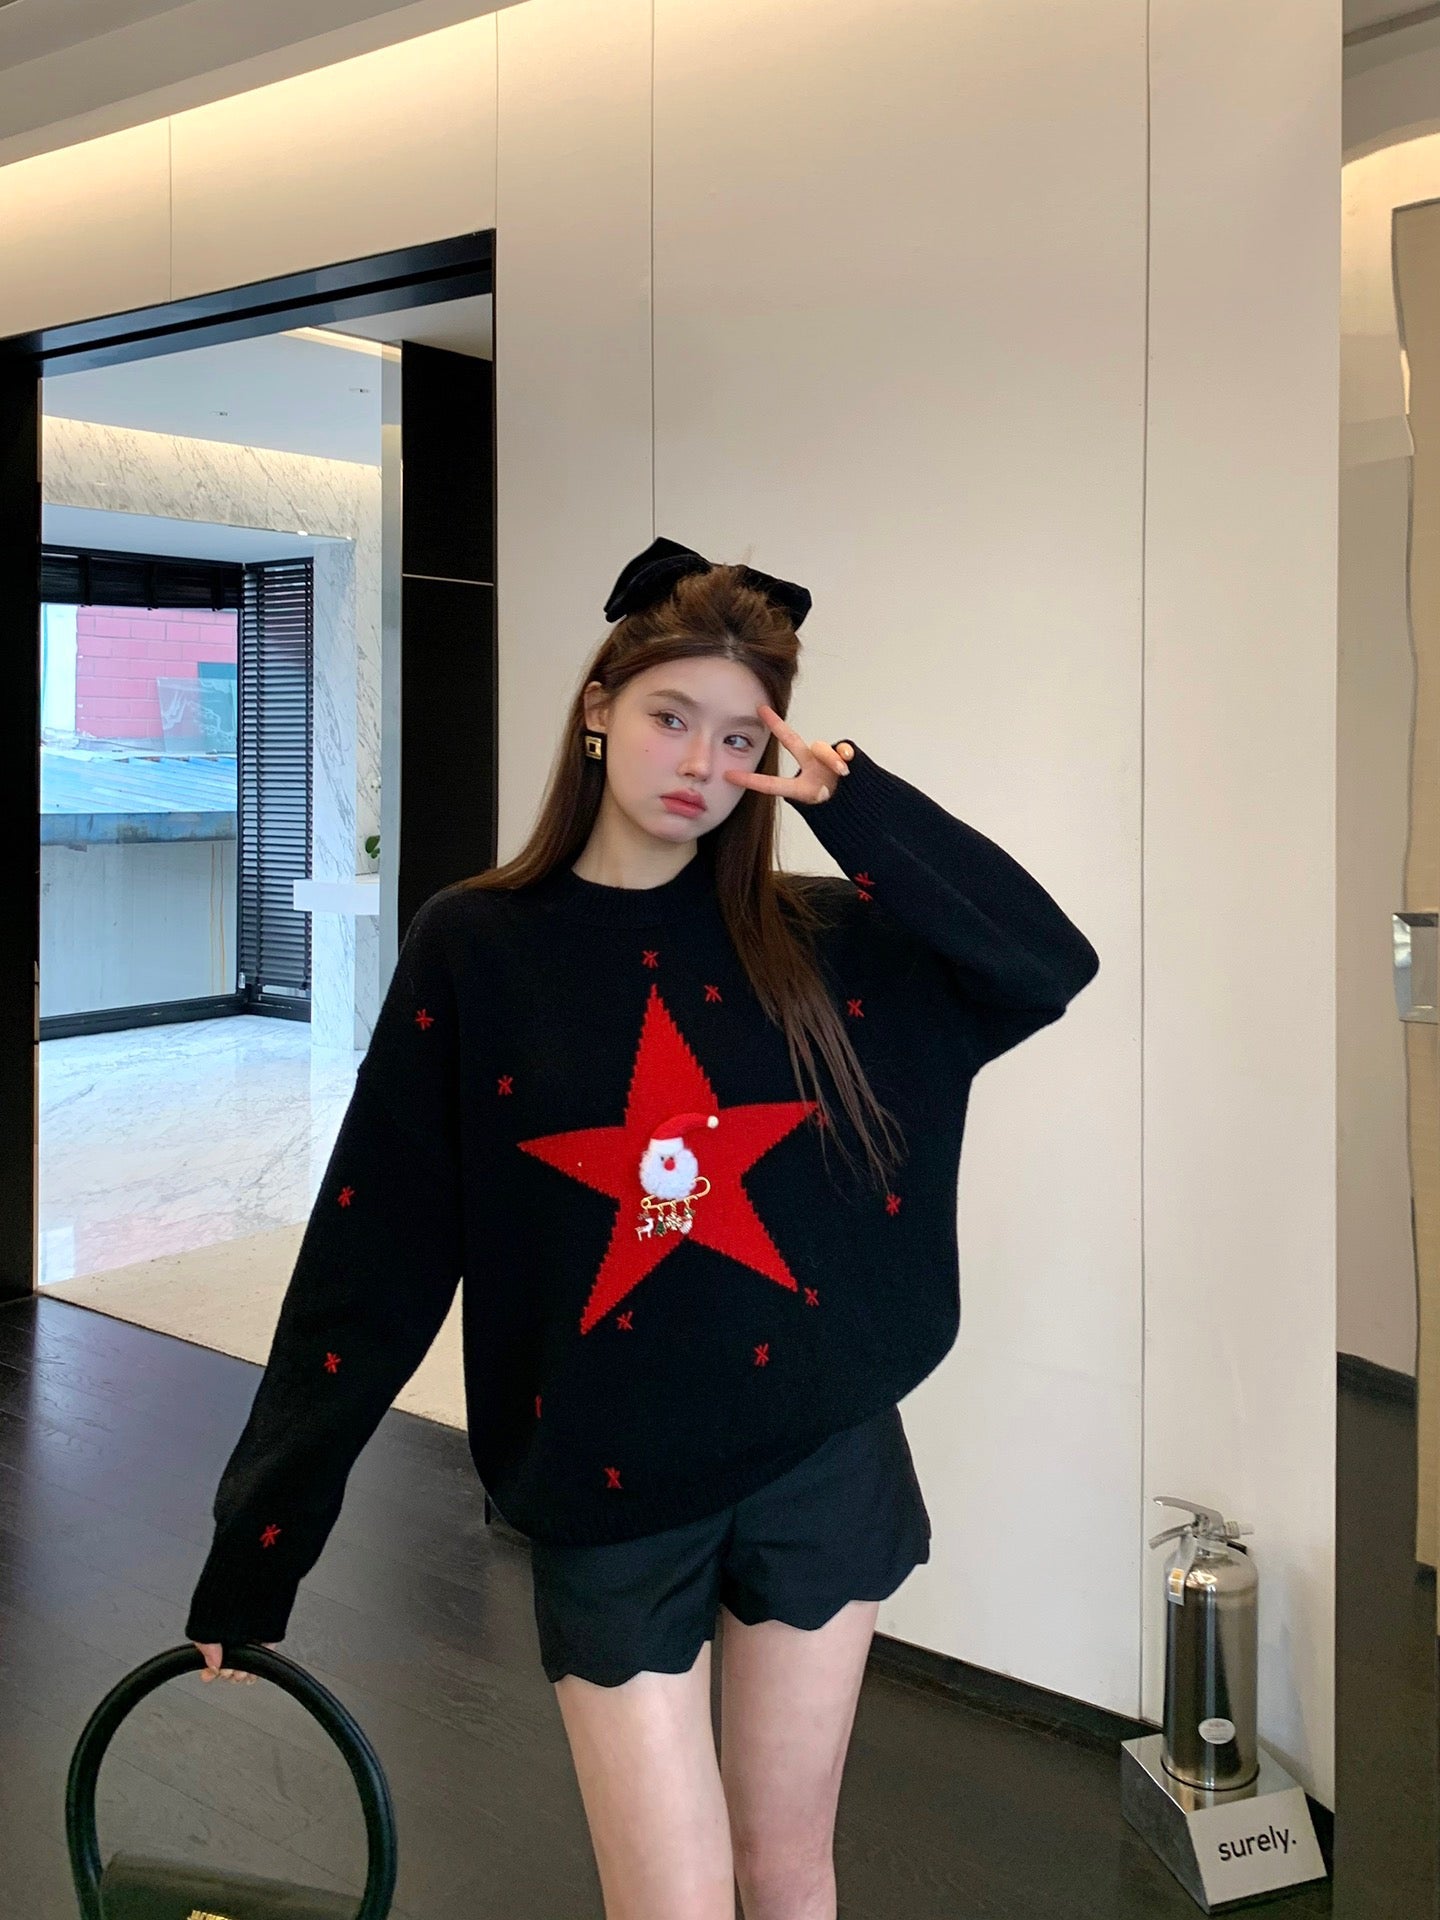 Aimme Sparrow Christmas Star Sweater Black